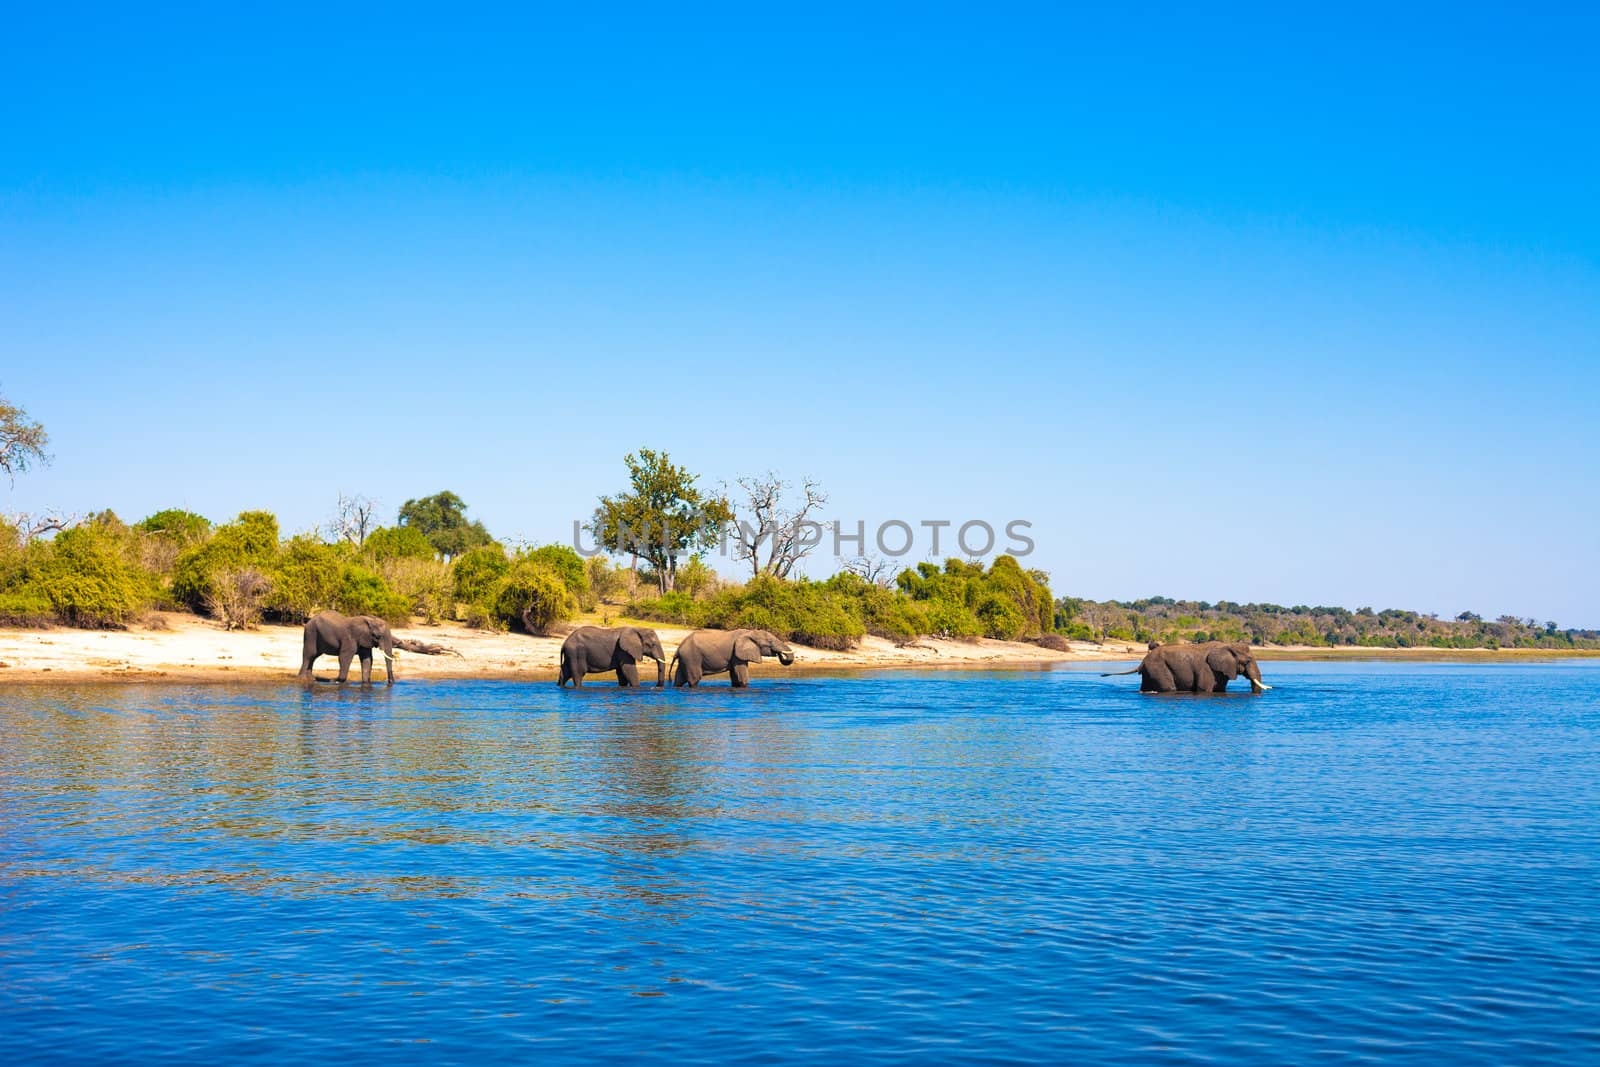 Elephants walking into the river, Chobe National Park